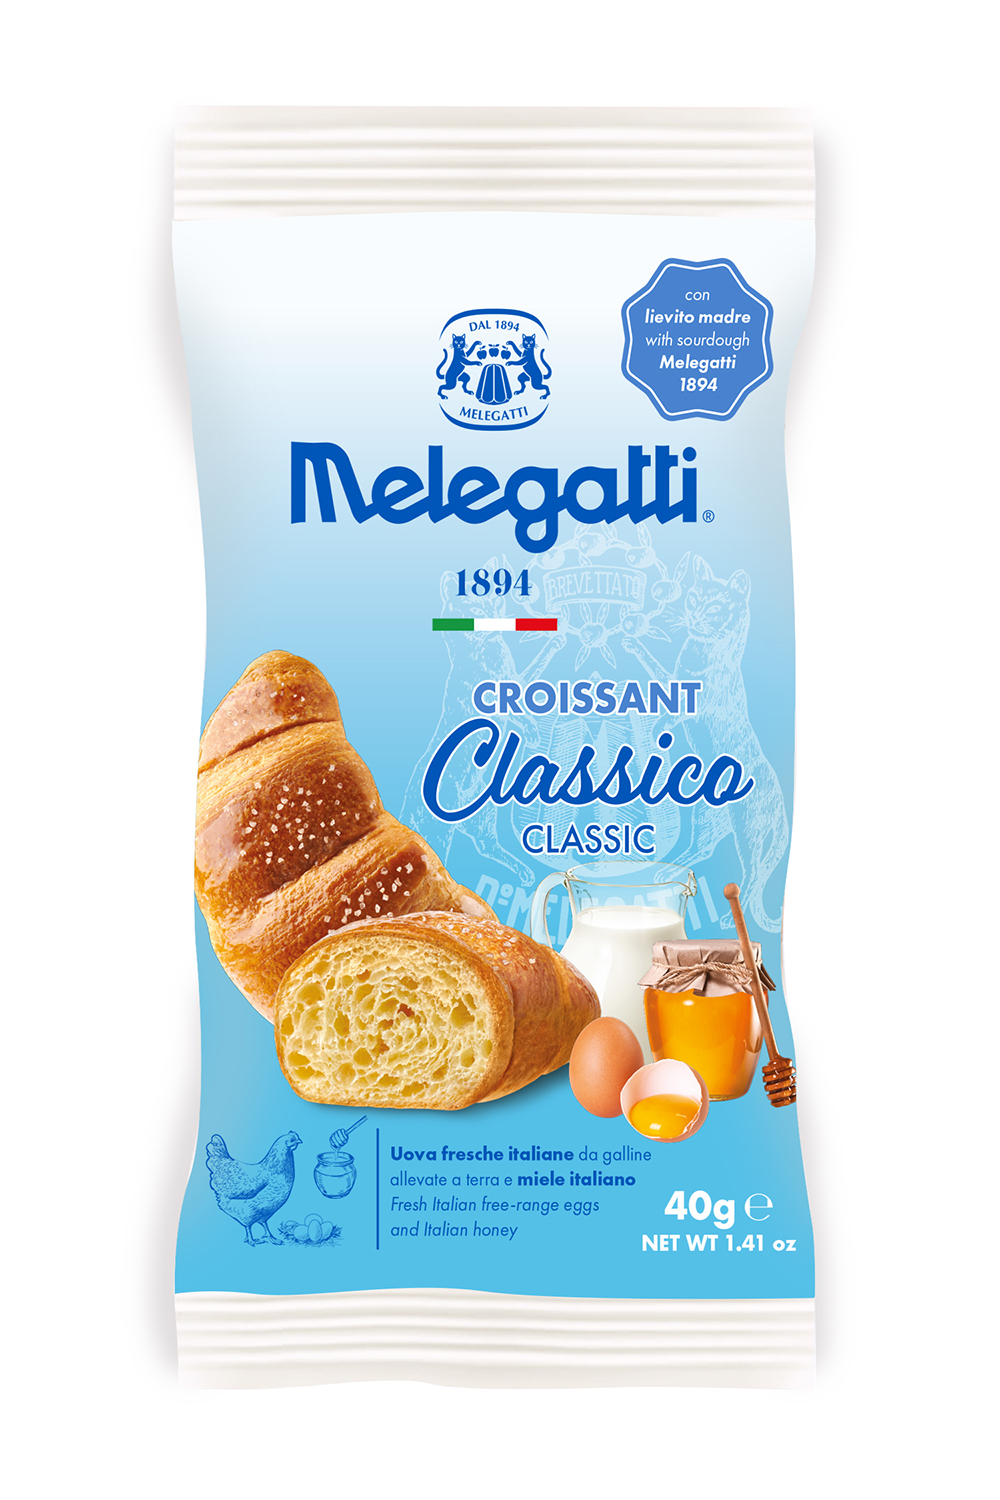 melegatti-croissant-classico